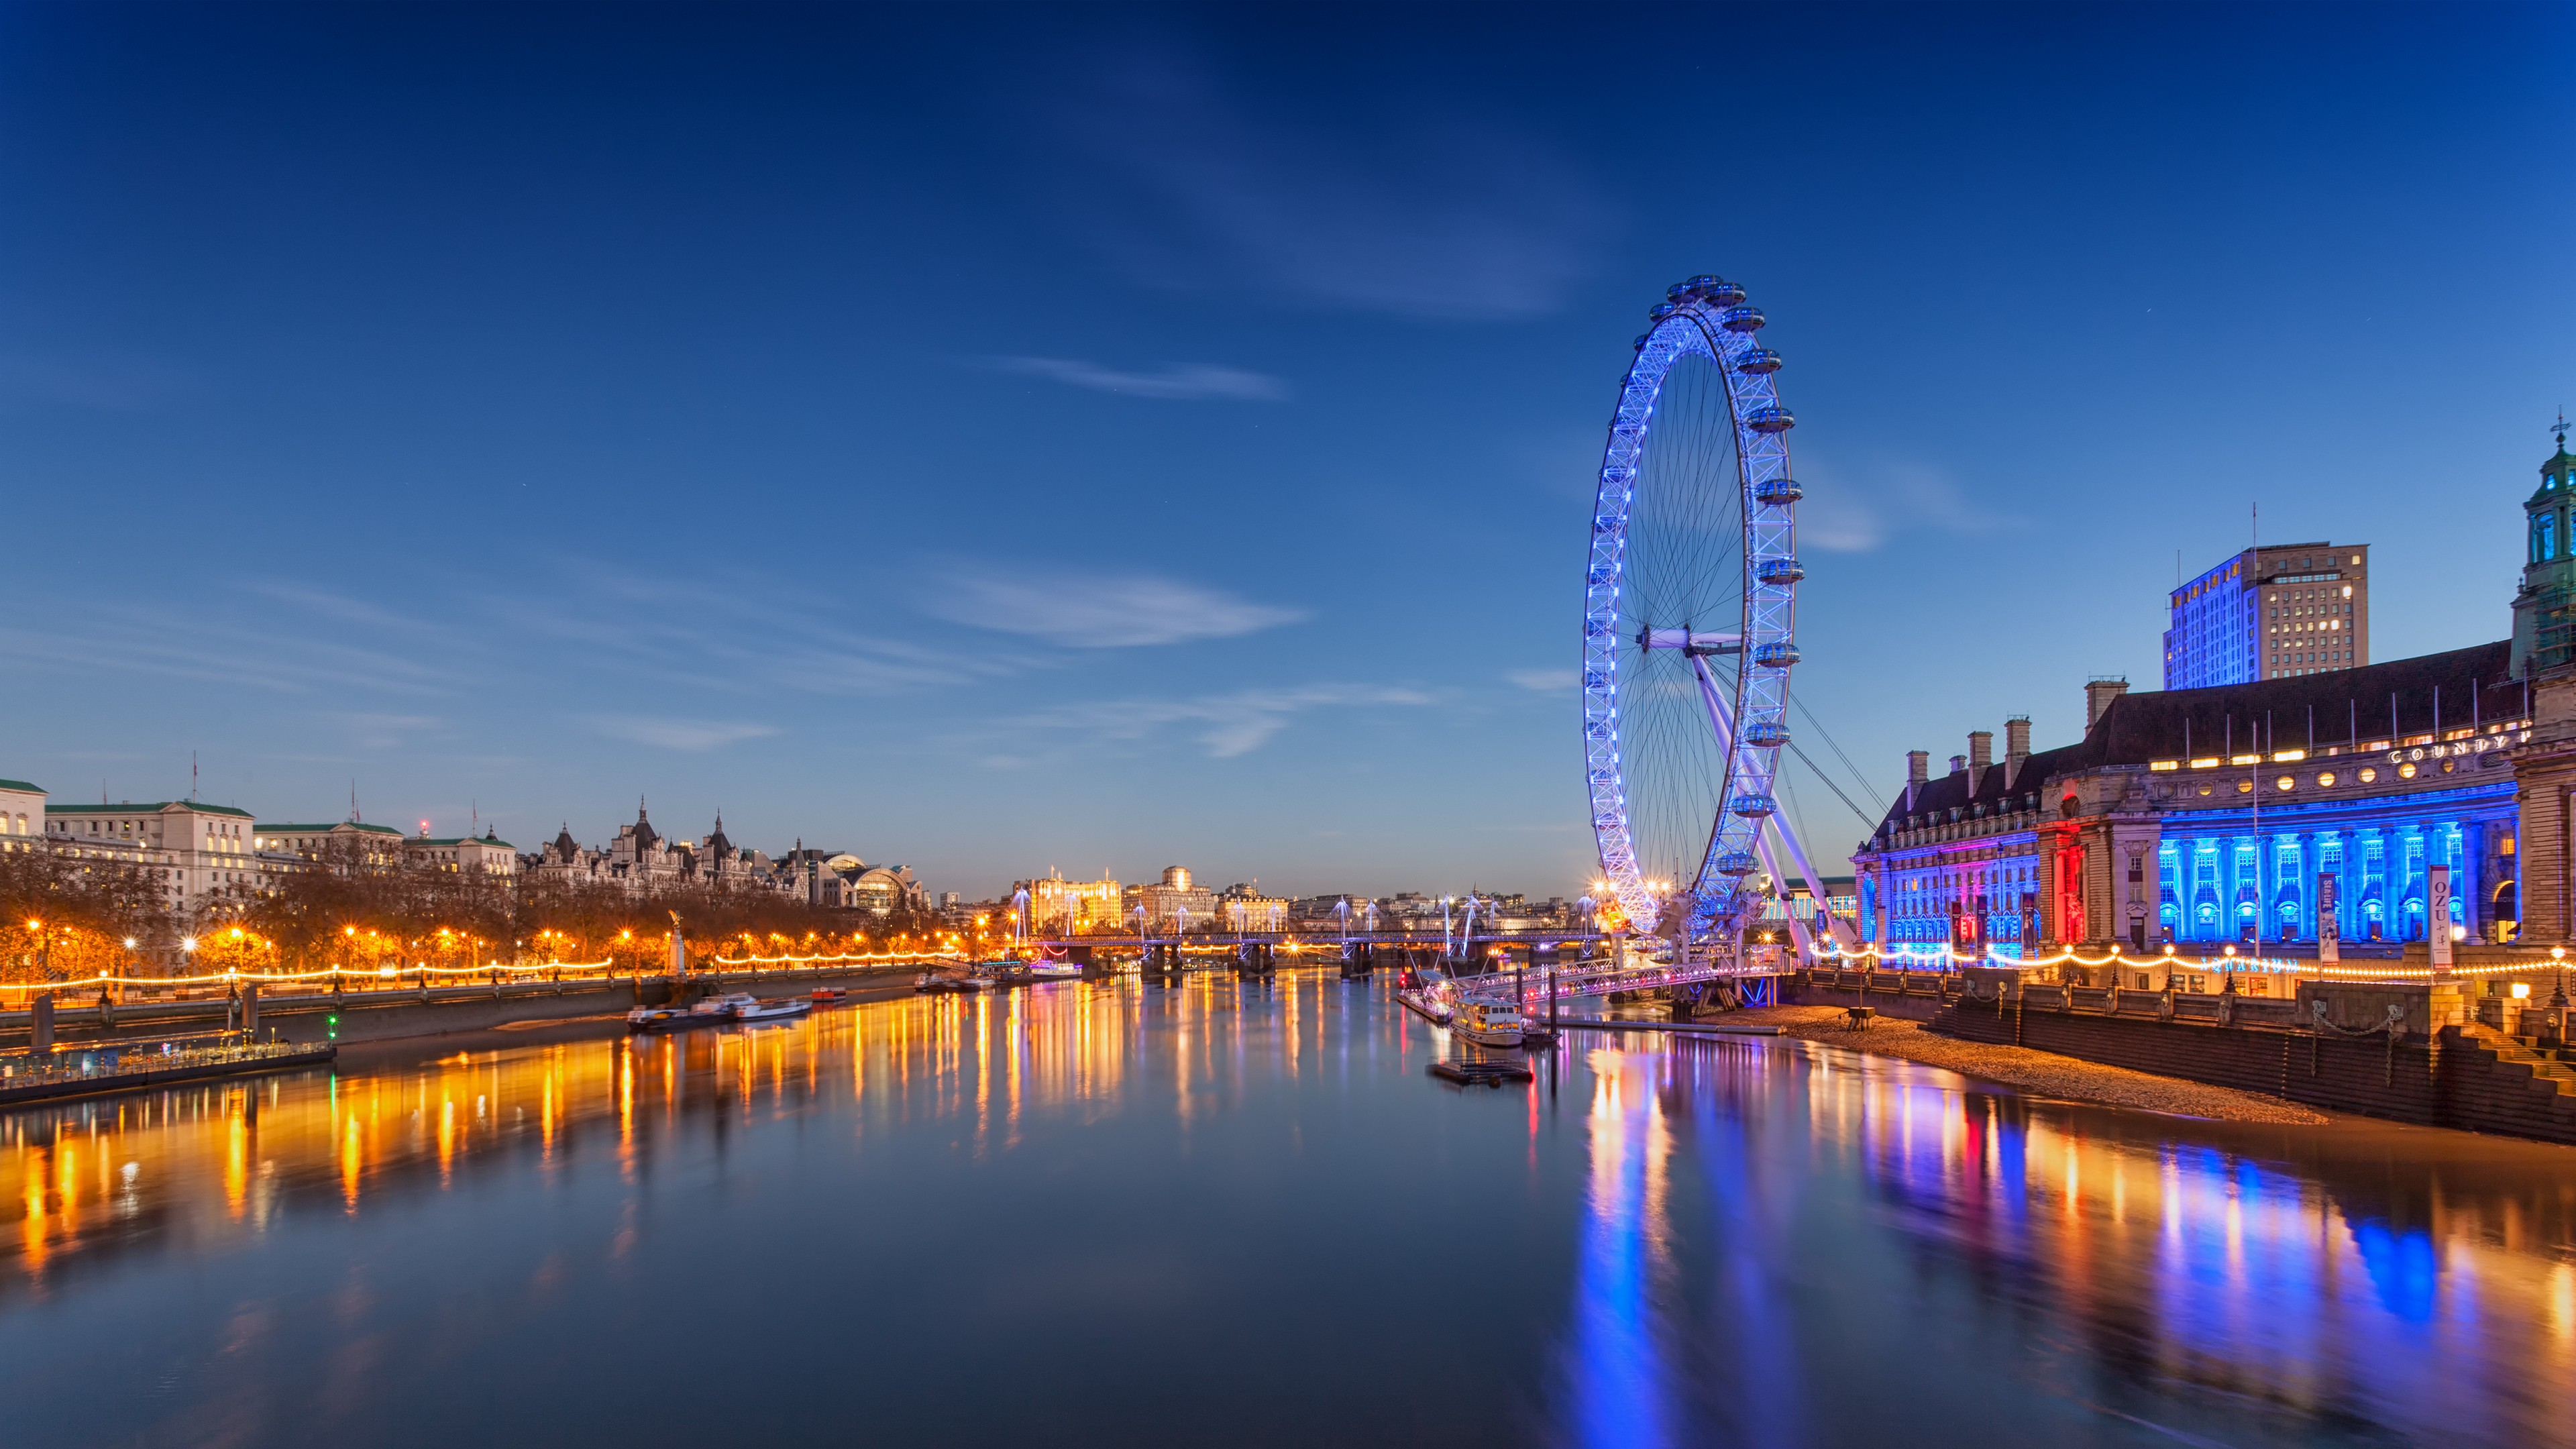 General 3840x2160 river London London Eye ferris wheel lights reflection River Thames UK England cityscape city lights sky